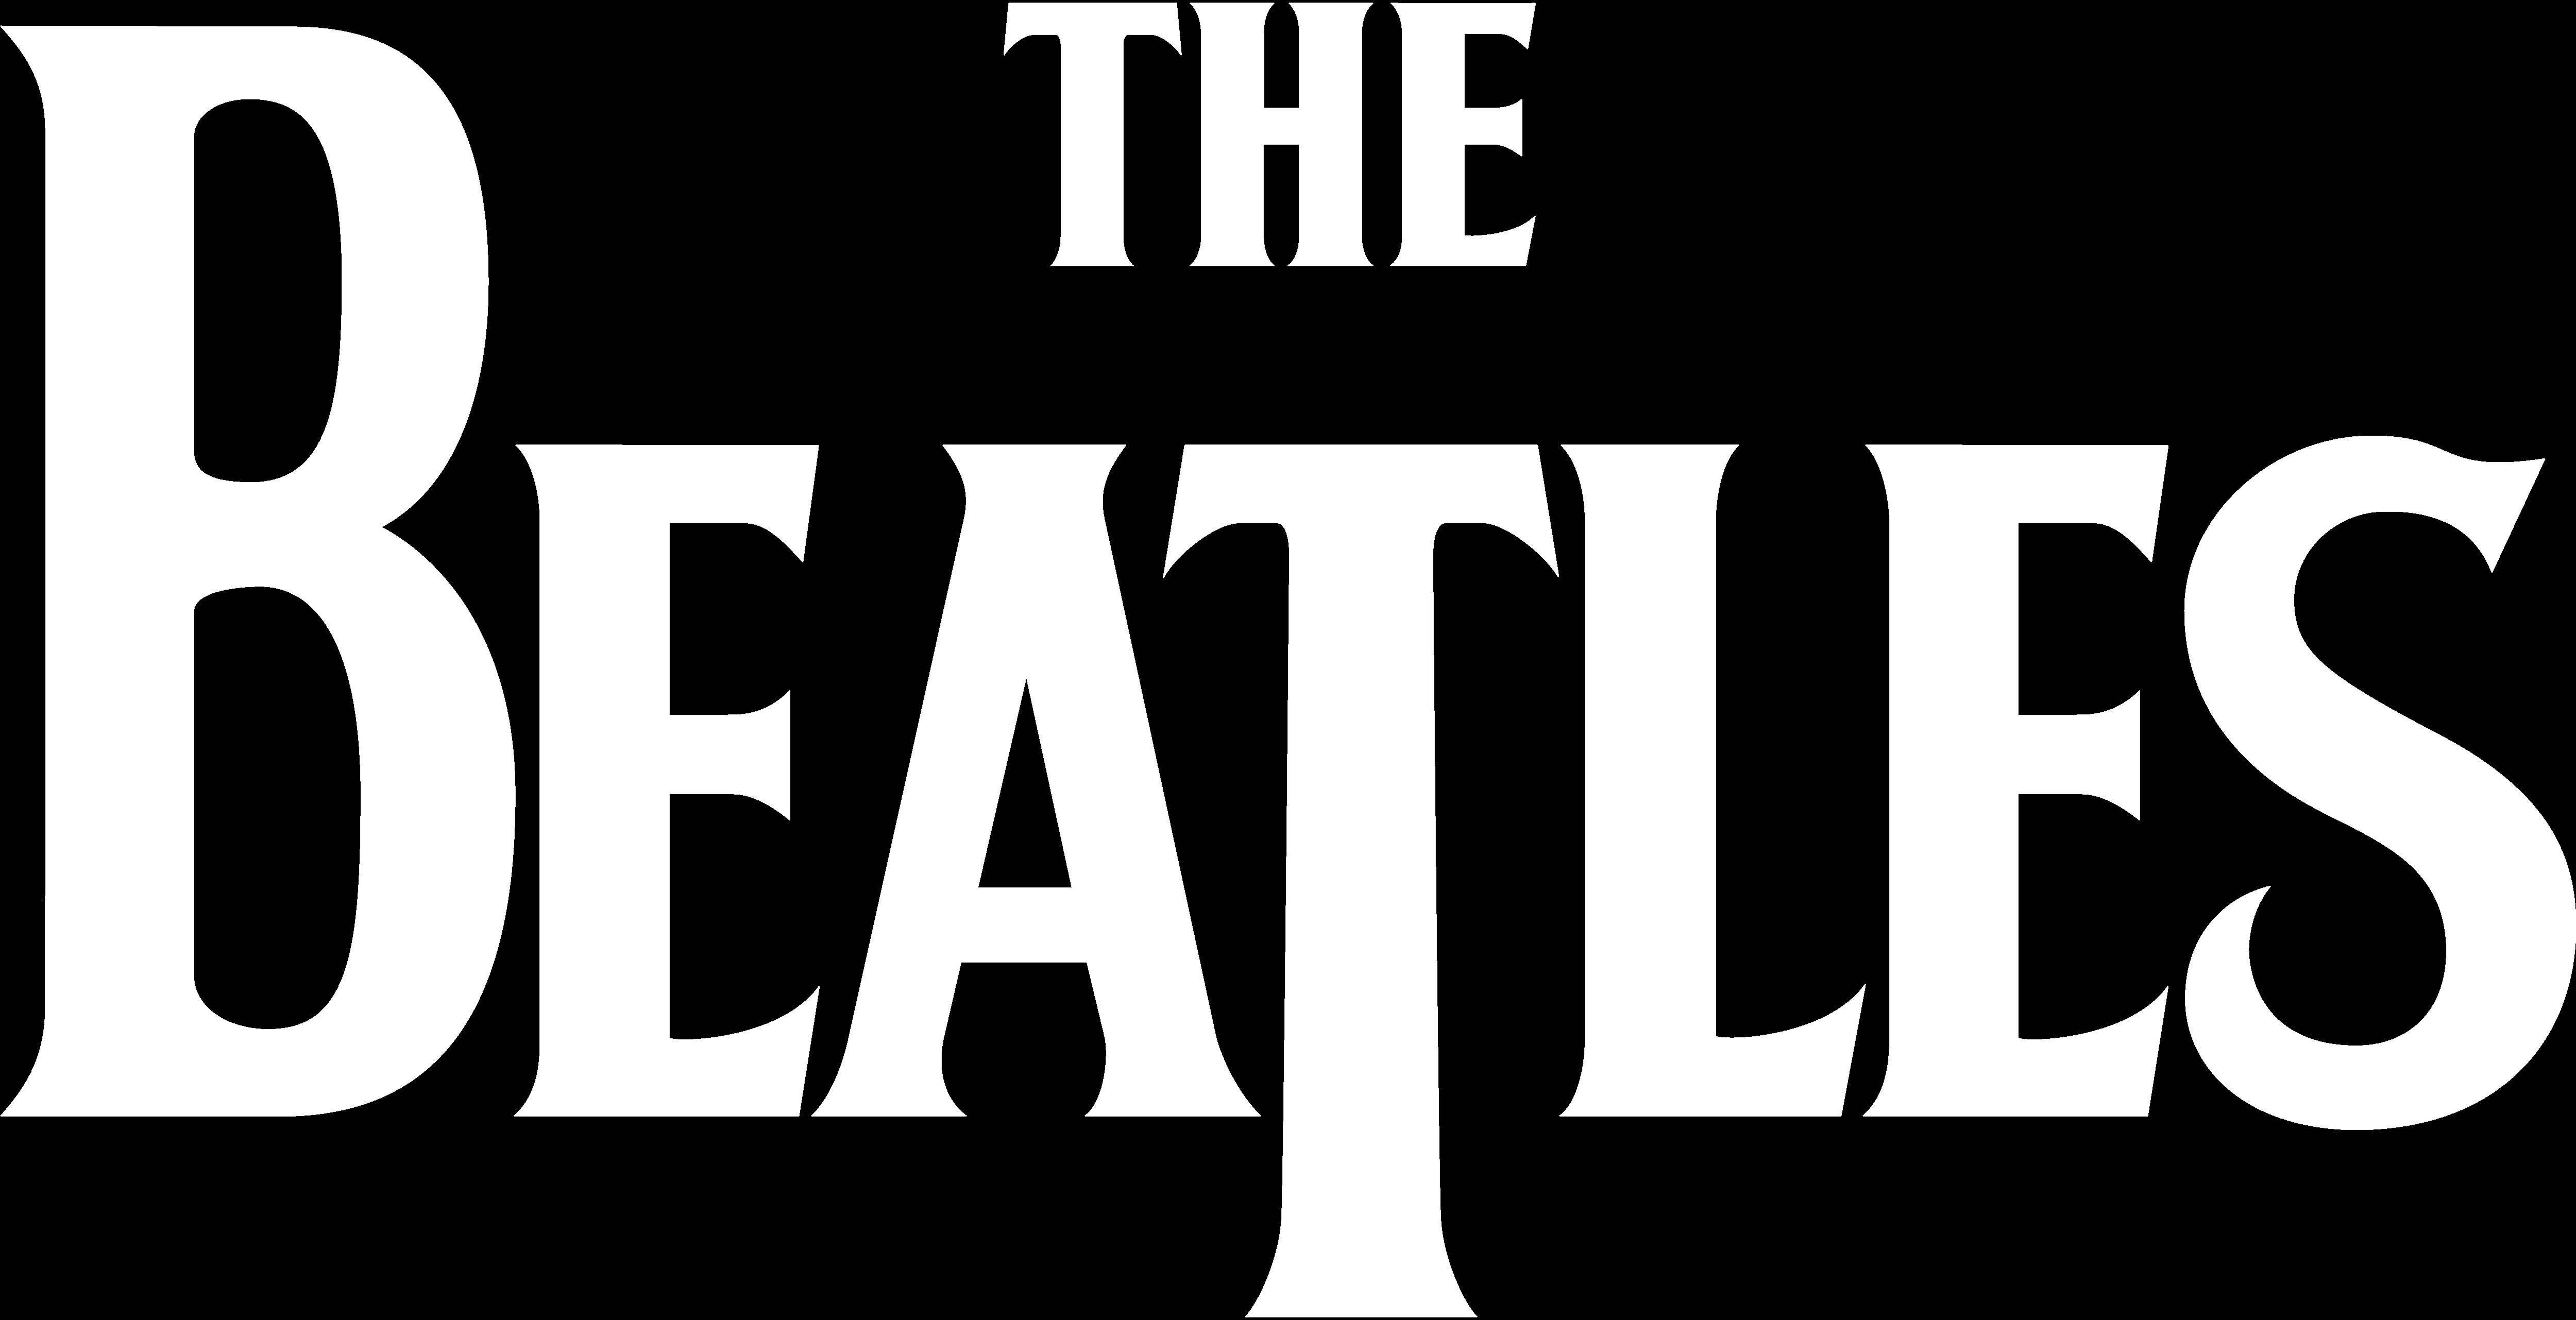 File:The Beatles logo.jpg - Wikimedia Commons